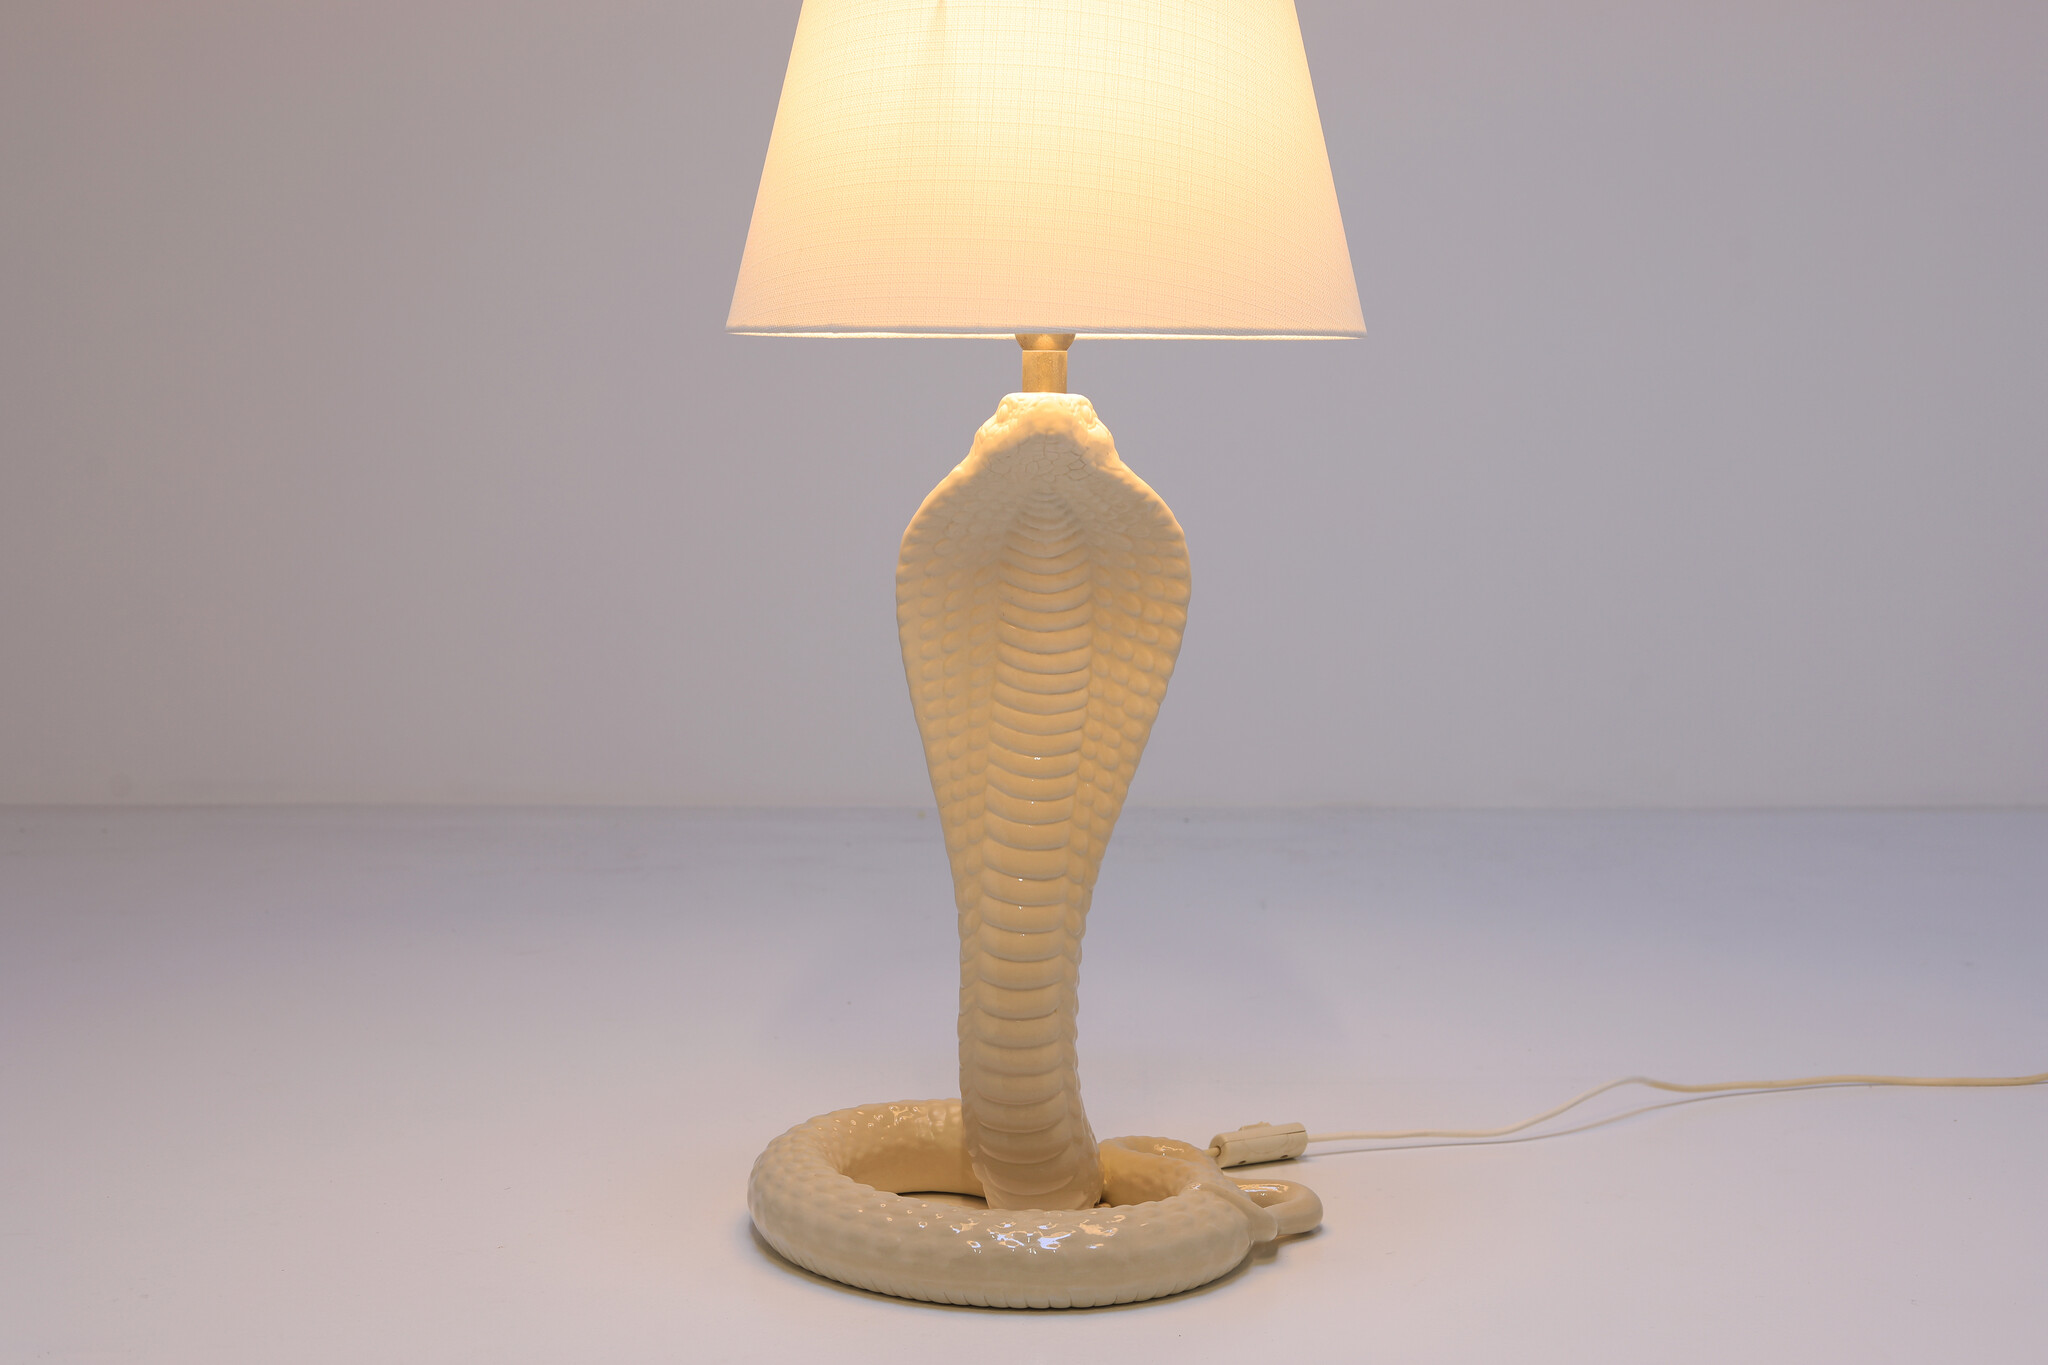 Cobra table lamp designed by Tommaso Barbi, 1970's